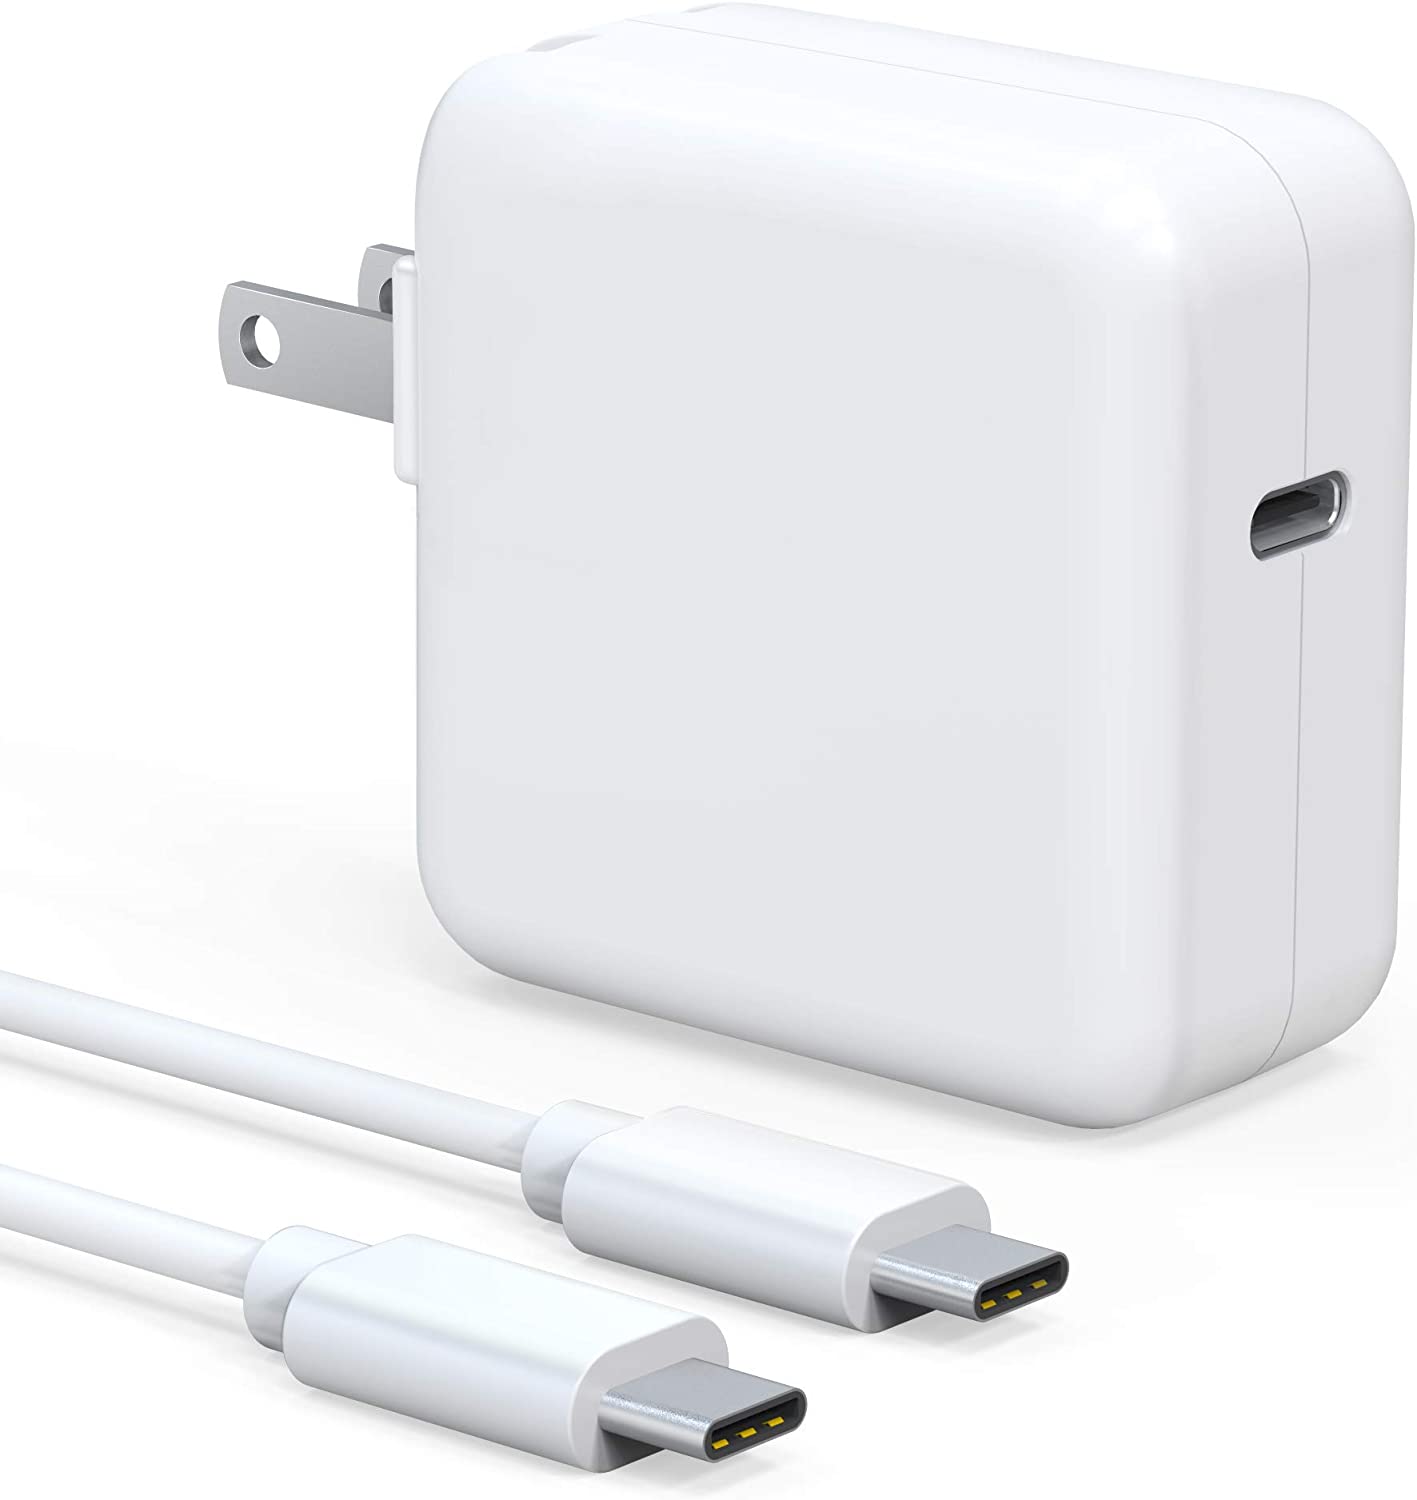 macbook air usb c not charging